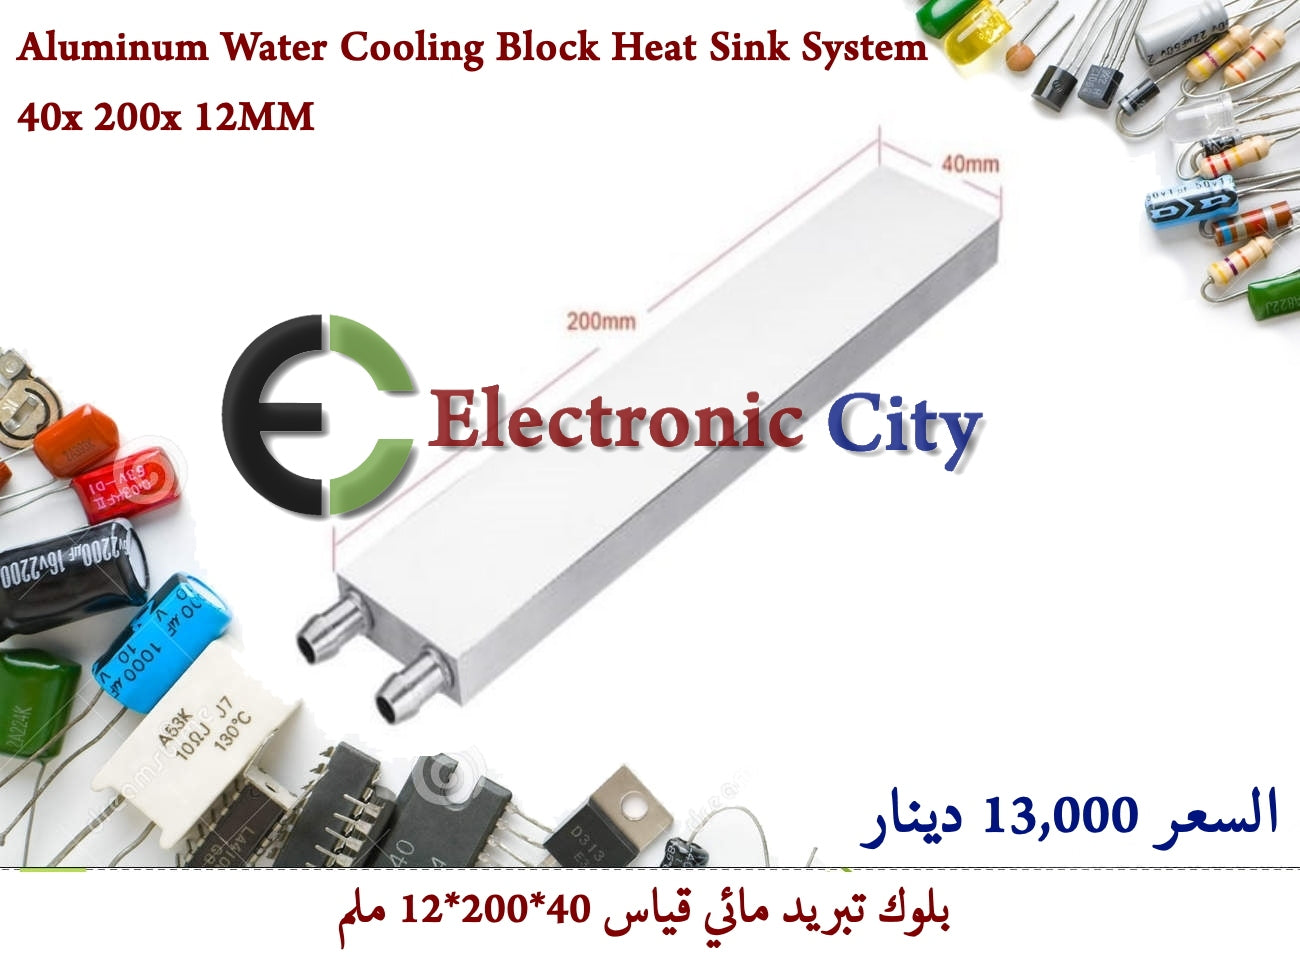 Aluminum Water Cooling Block Heat Sink System 40x 200x 12MM #Q 7- X-HY0009E